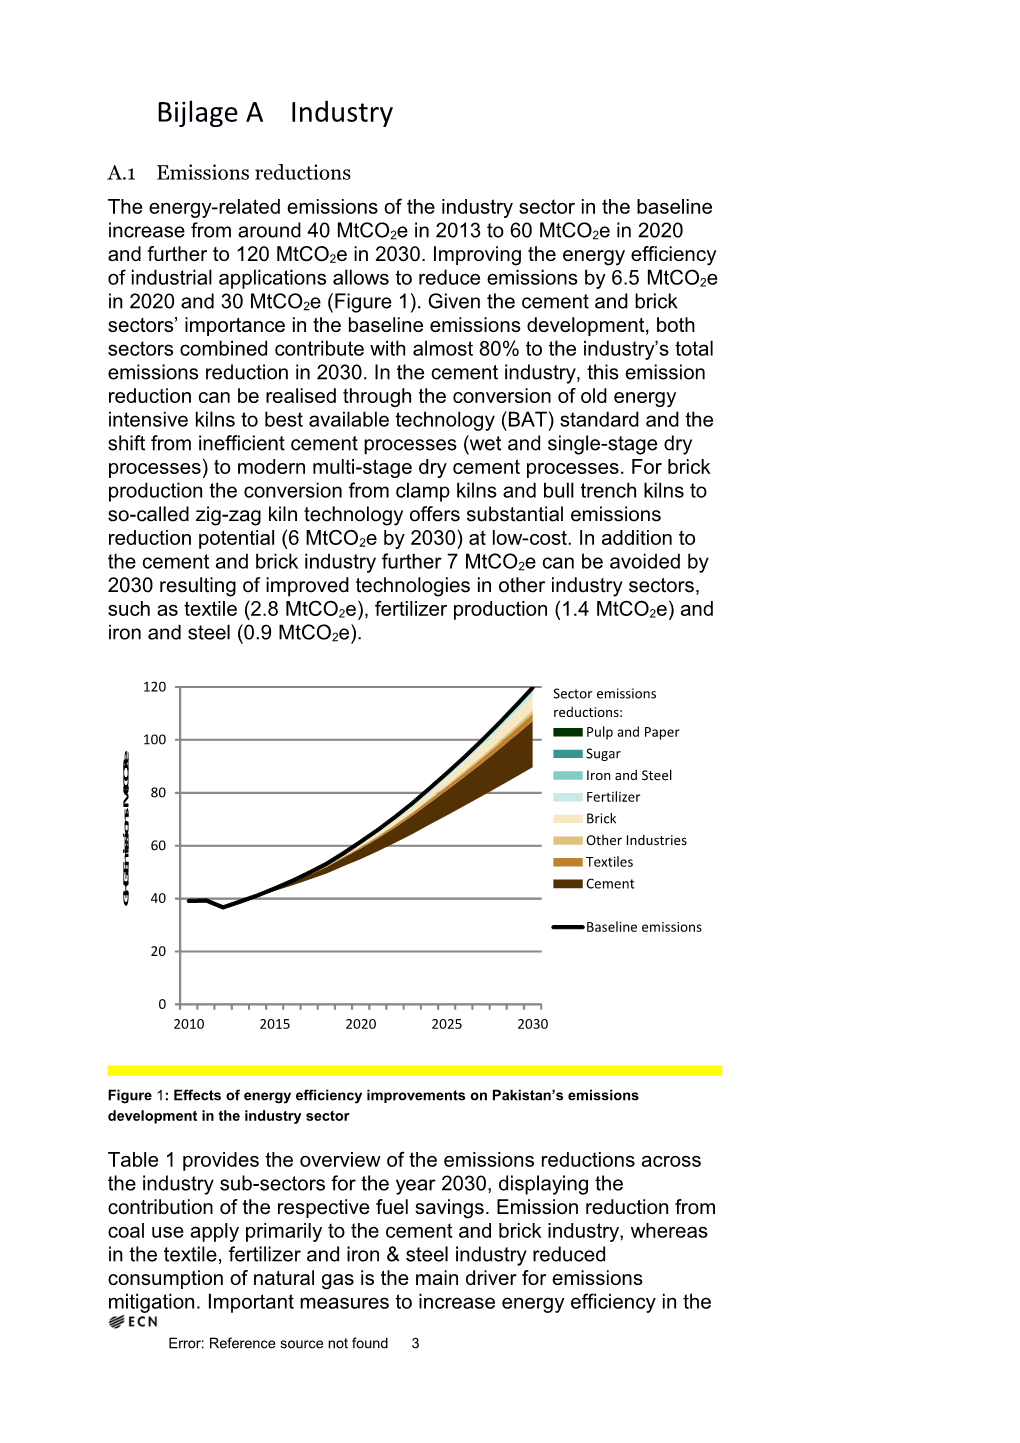 Figure 1 : Effects of Energy Efficiency Improvements on Pakistan S Emissions Development